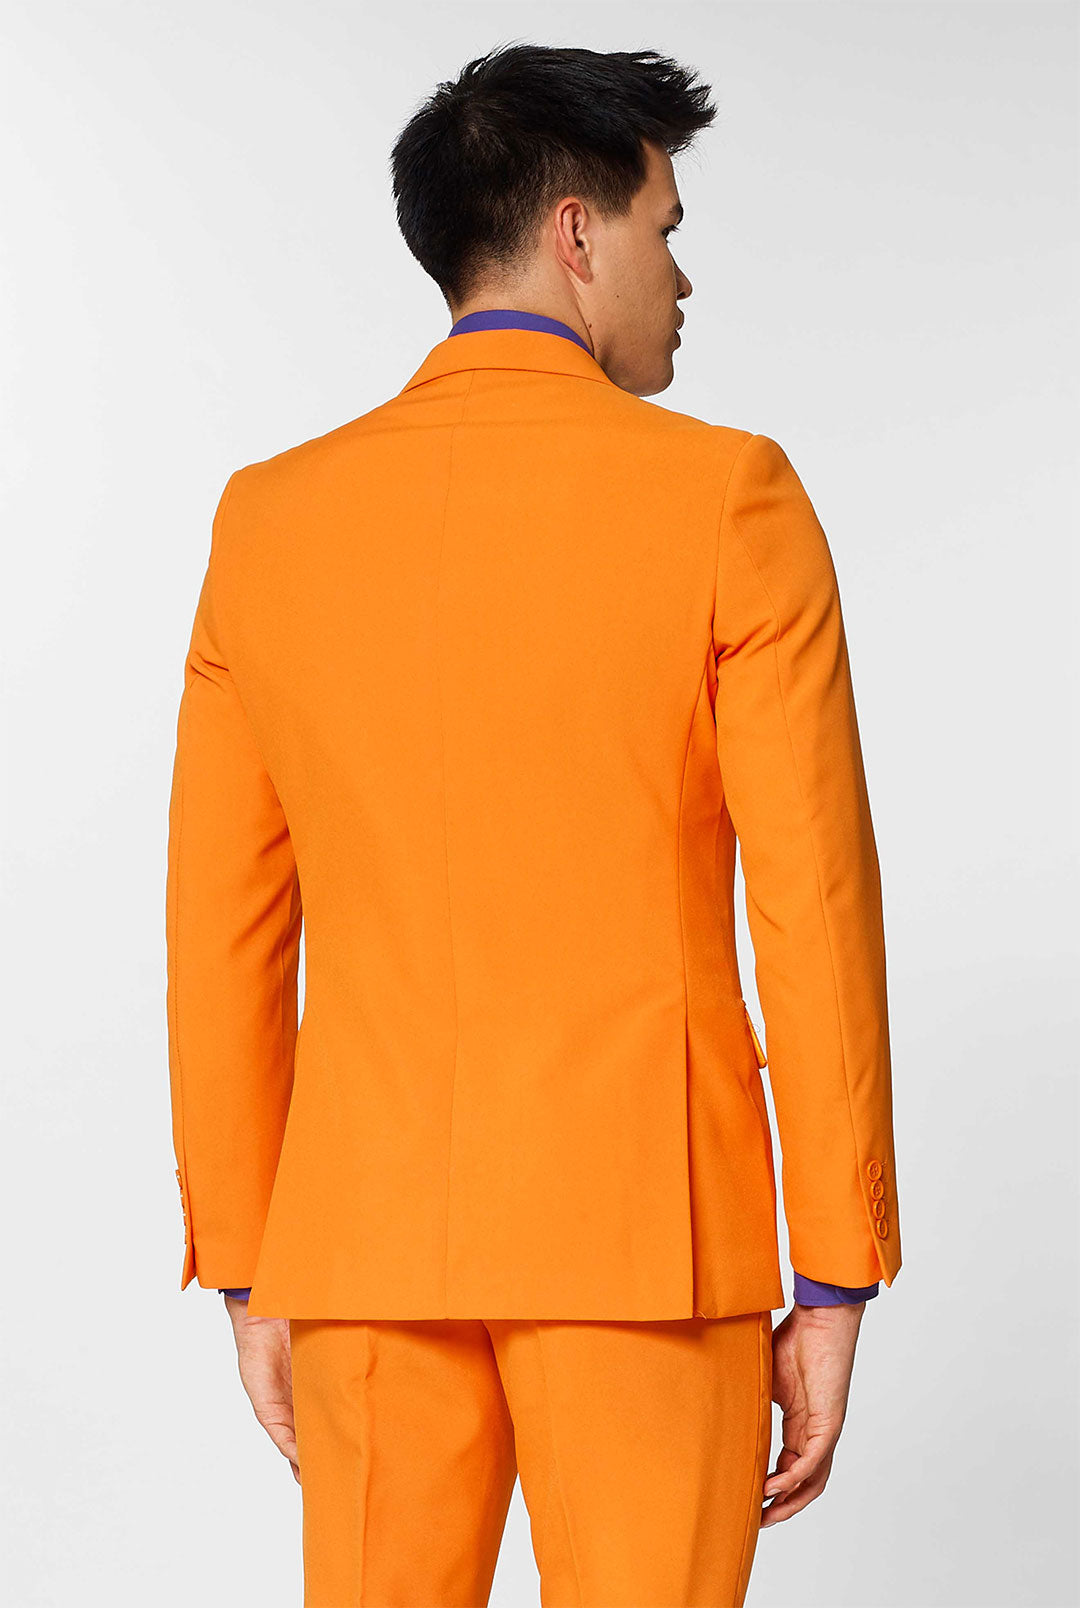 Orange Color combination suits/Orange Contrast Punjabi Salwar Suit with  Designing /#FashionBlink - YouTube